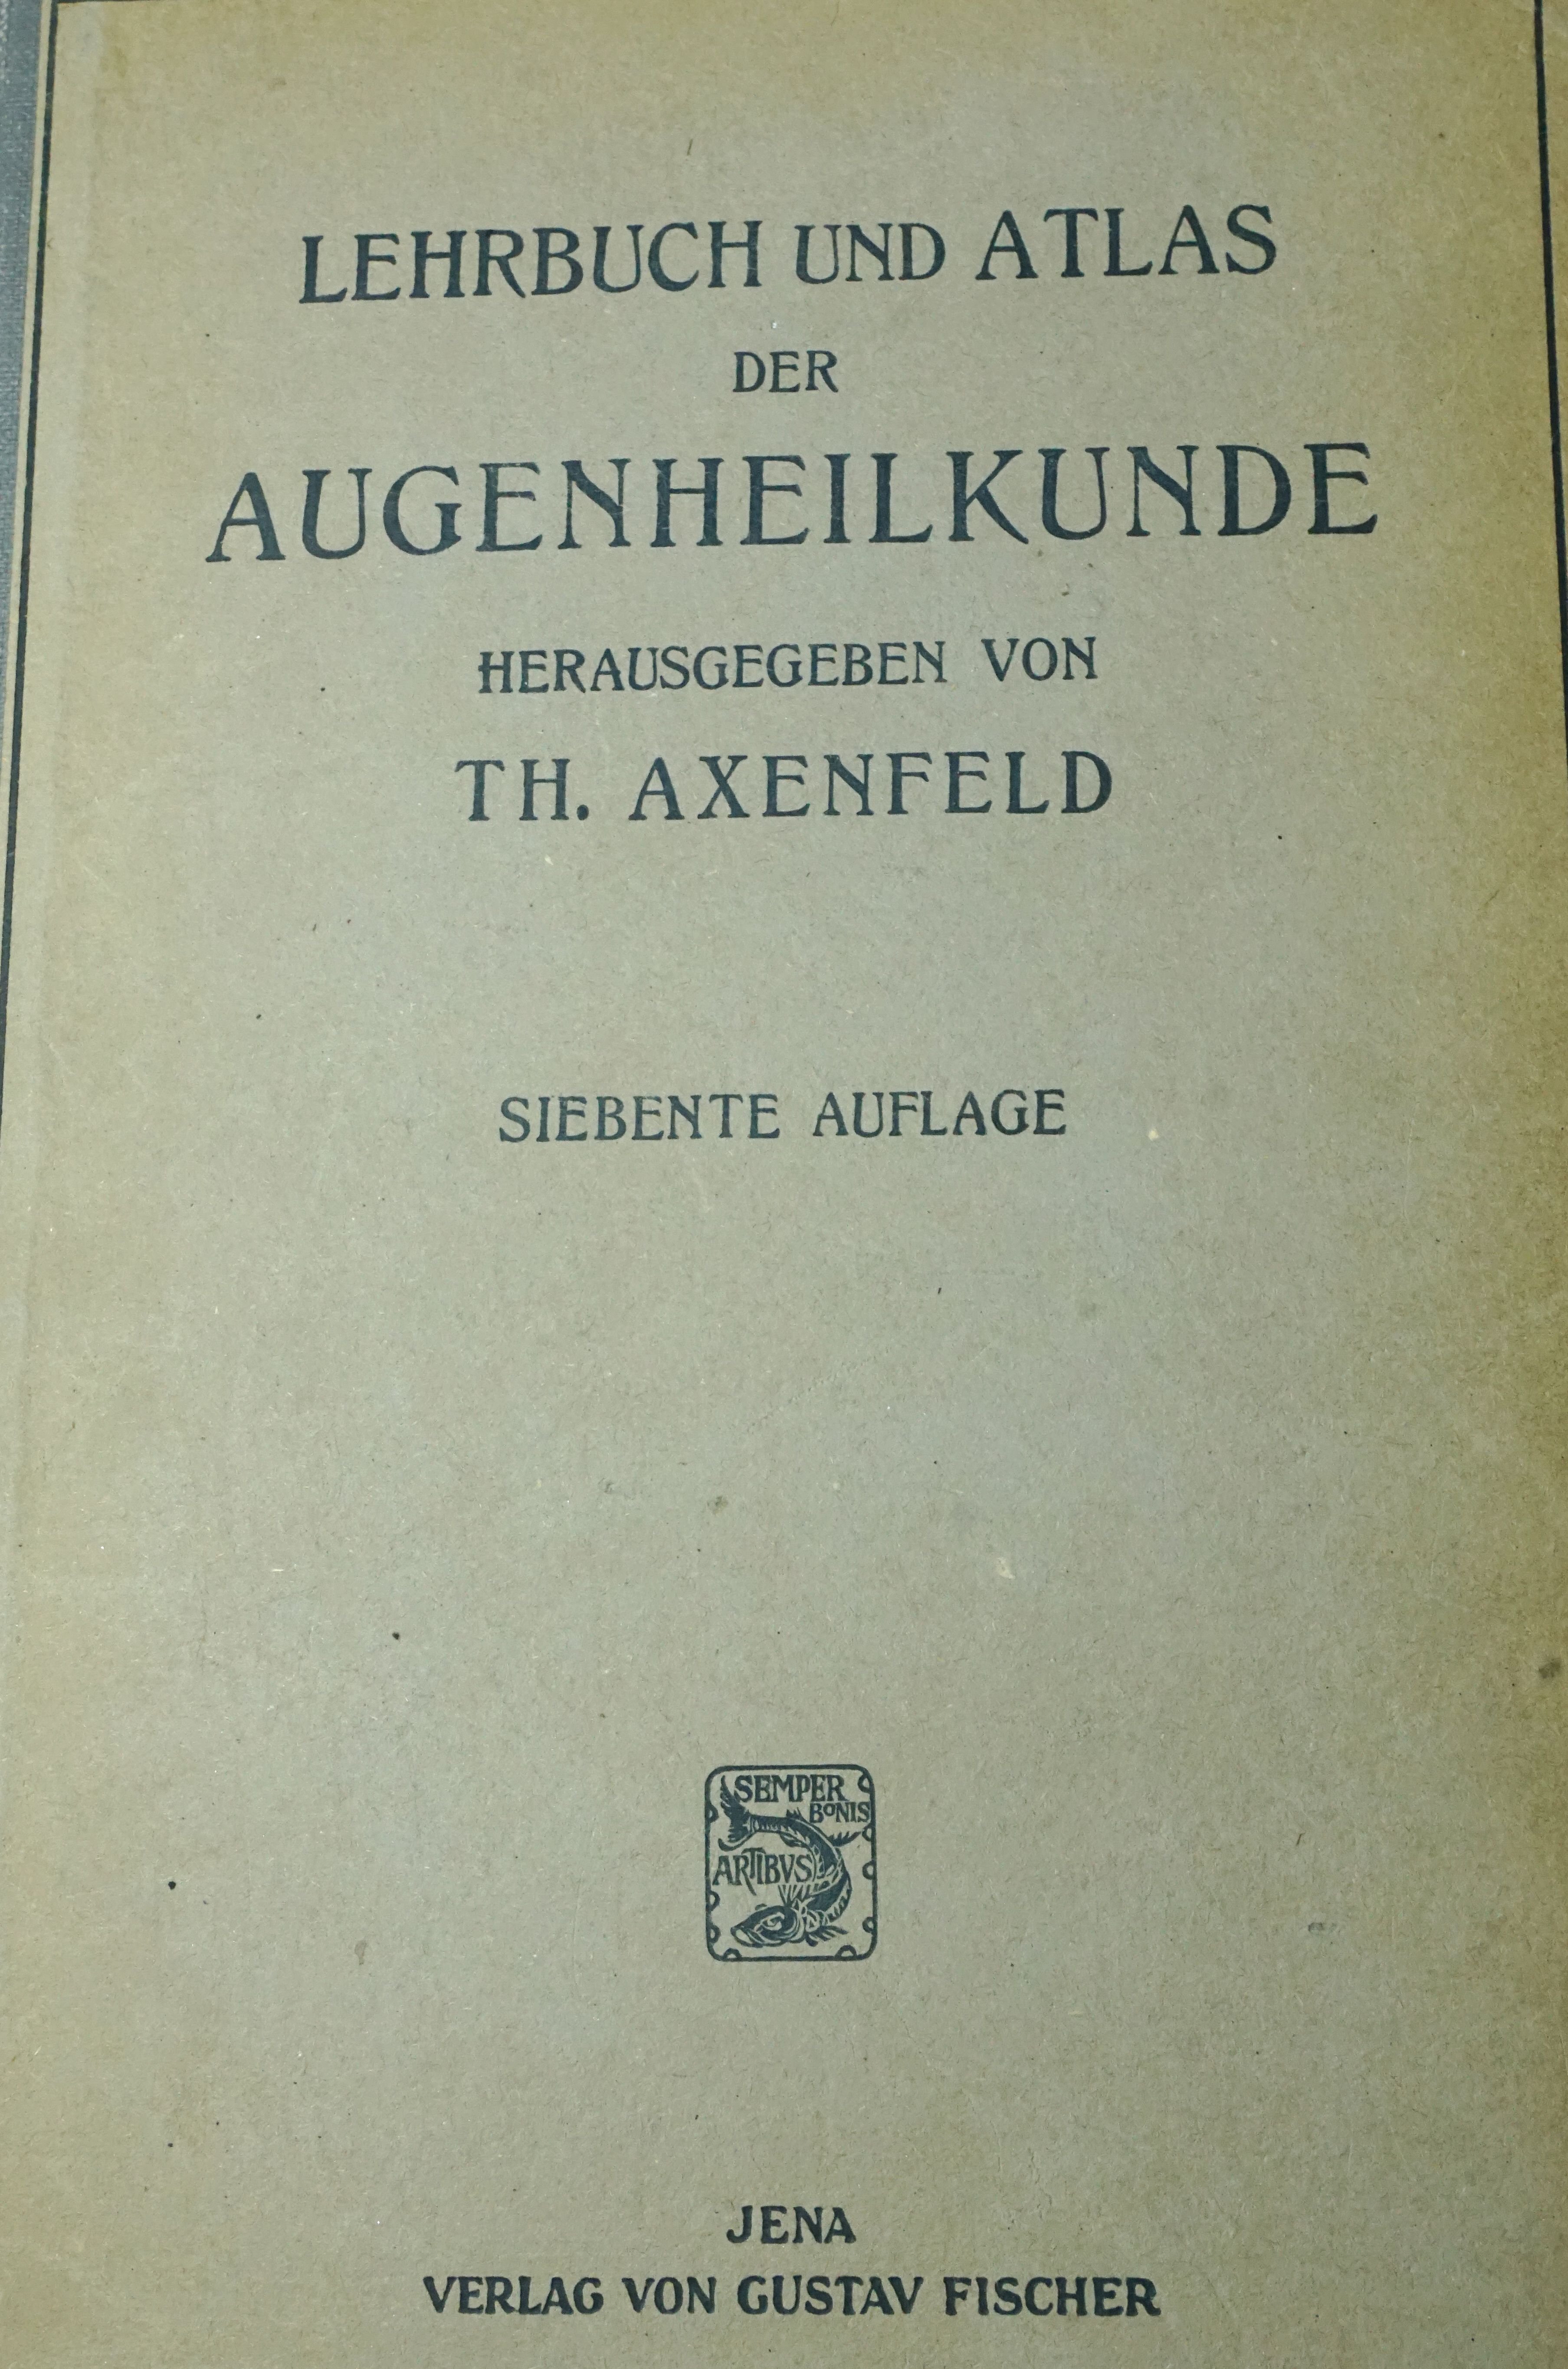 Lehrbuch und Atlas der Augenheilkunde (Krankenhausmuseum Bielefeld e.V. CC BY-NC-SA)